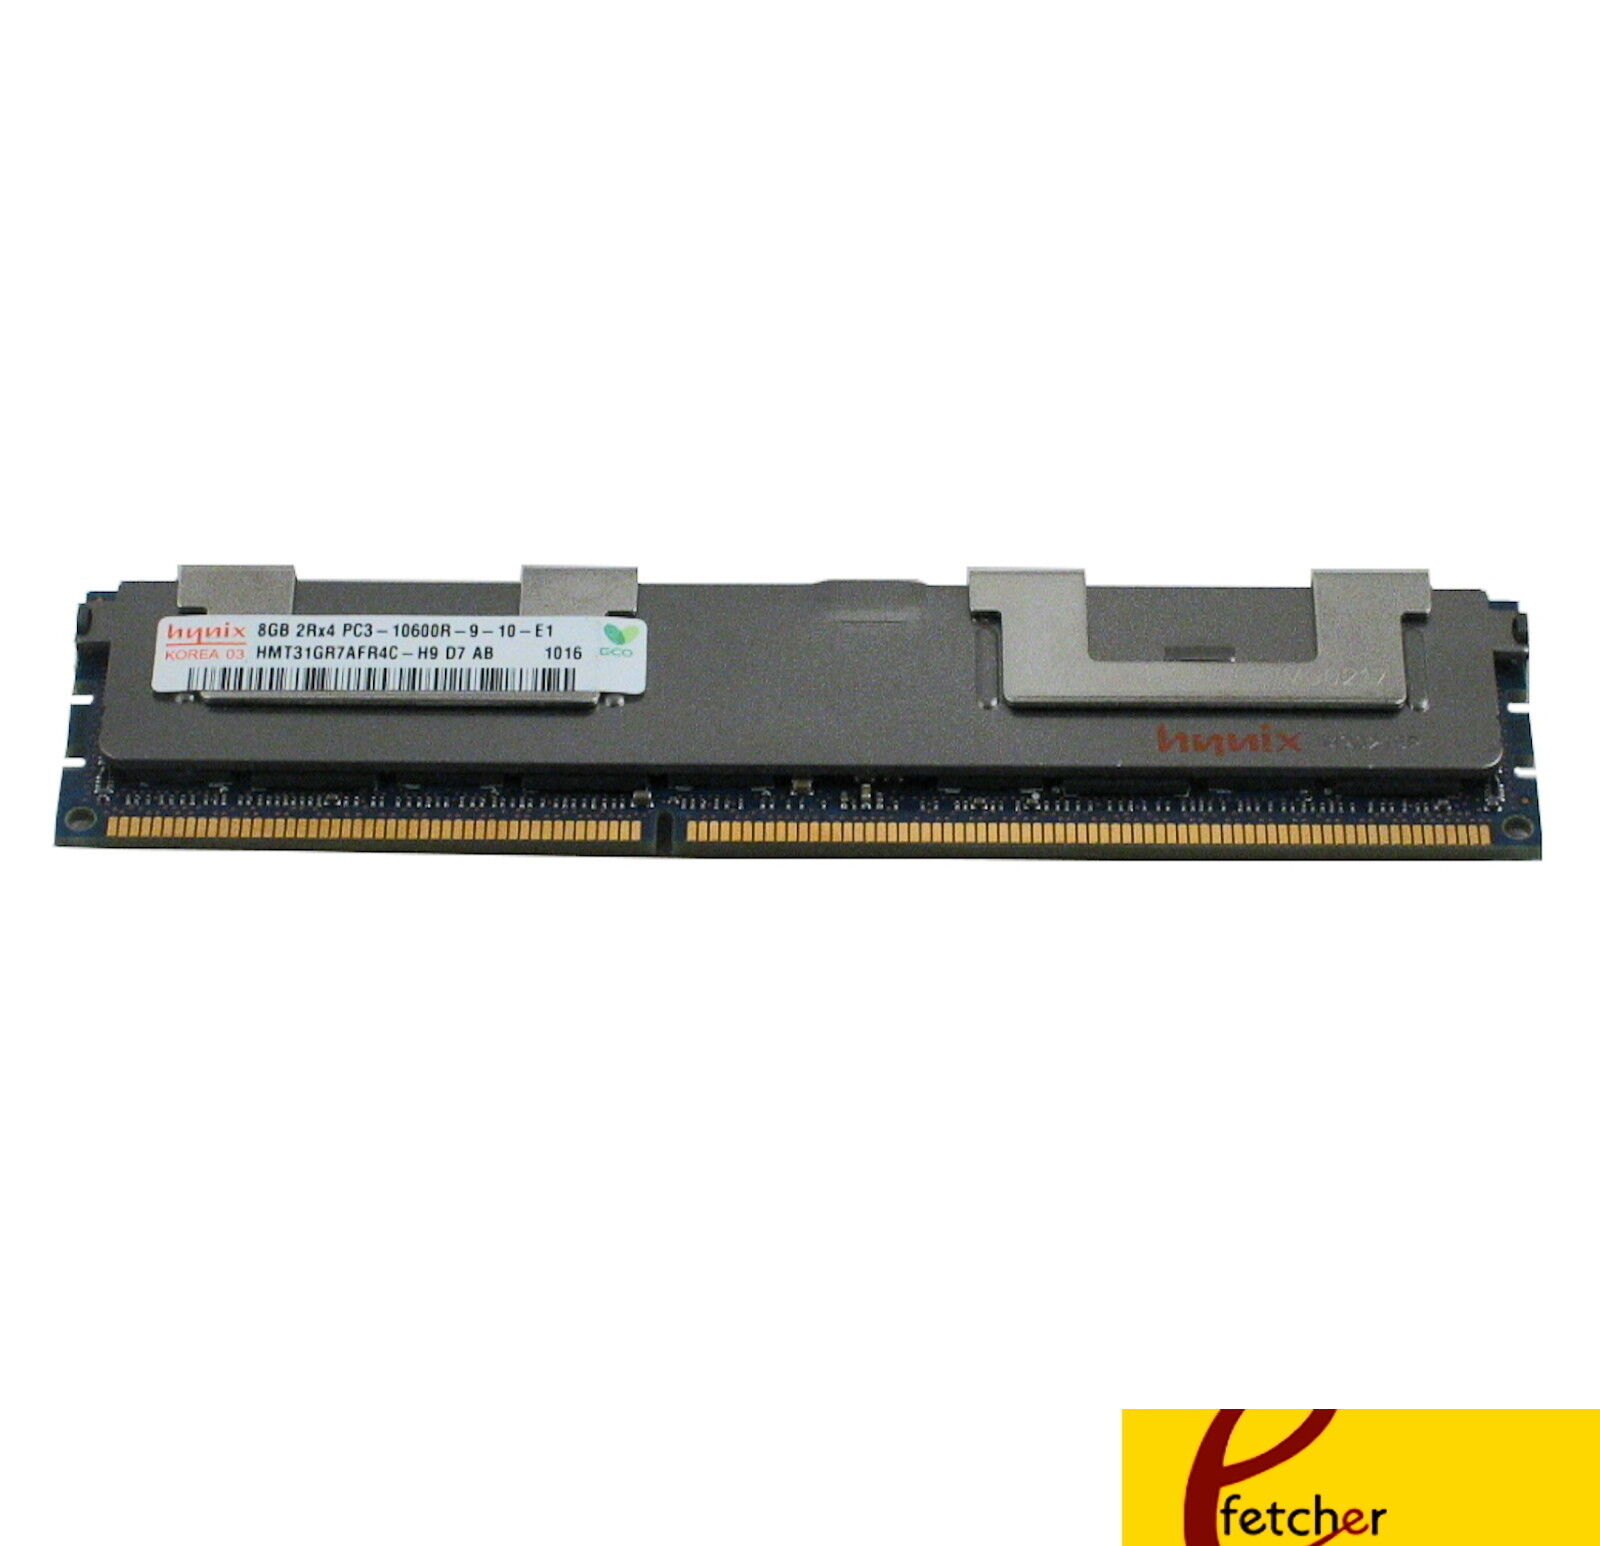 Supermicro P/N MEM-DR380L-HL03-ER13 8GB DDR3 ECC Reg Memory for  X8DT3, X8DTL